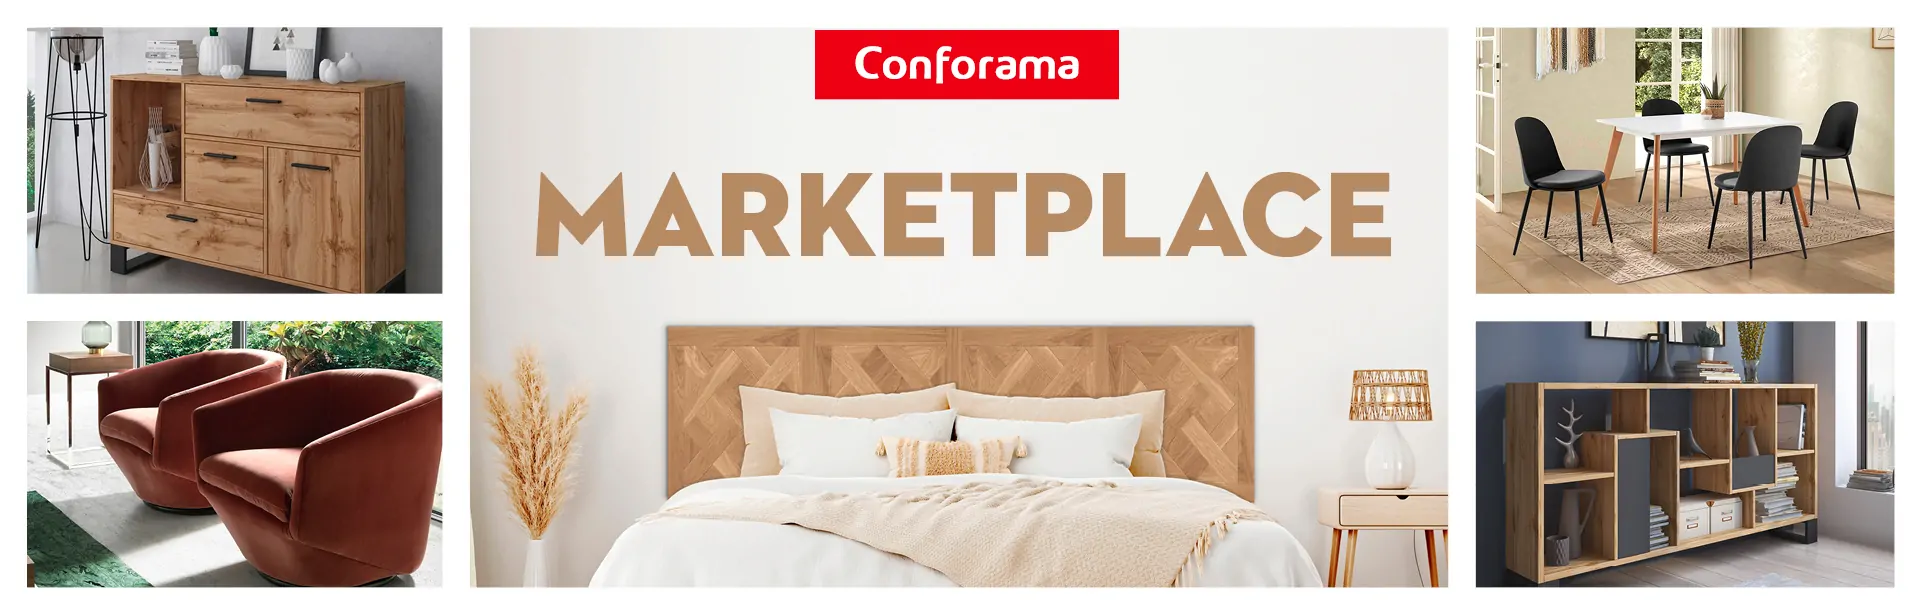 Conforama Marketplace